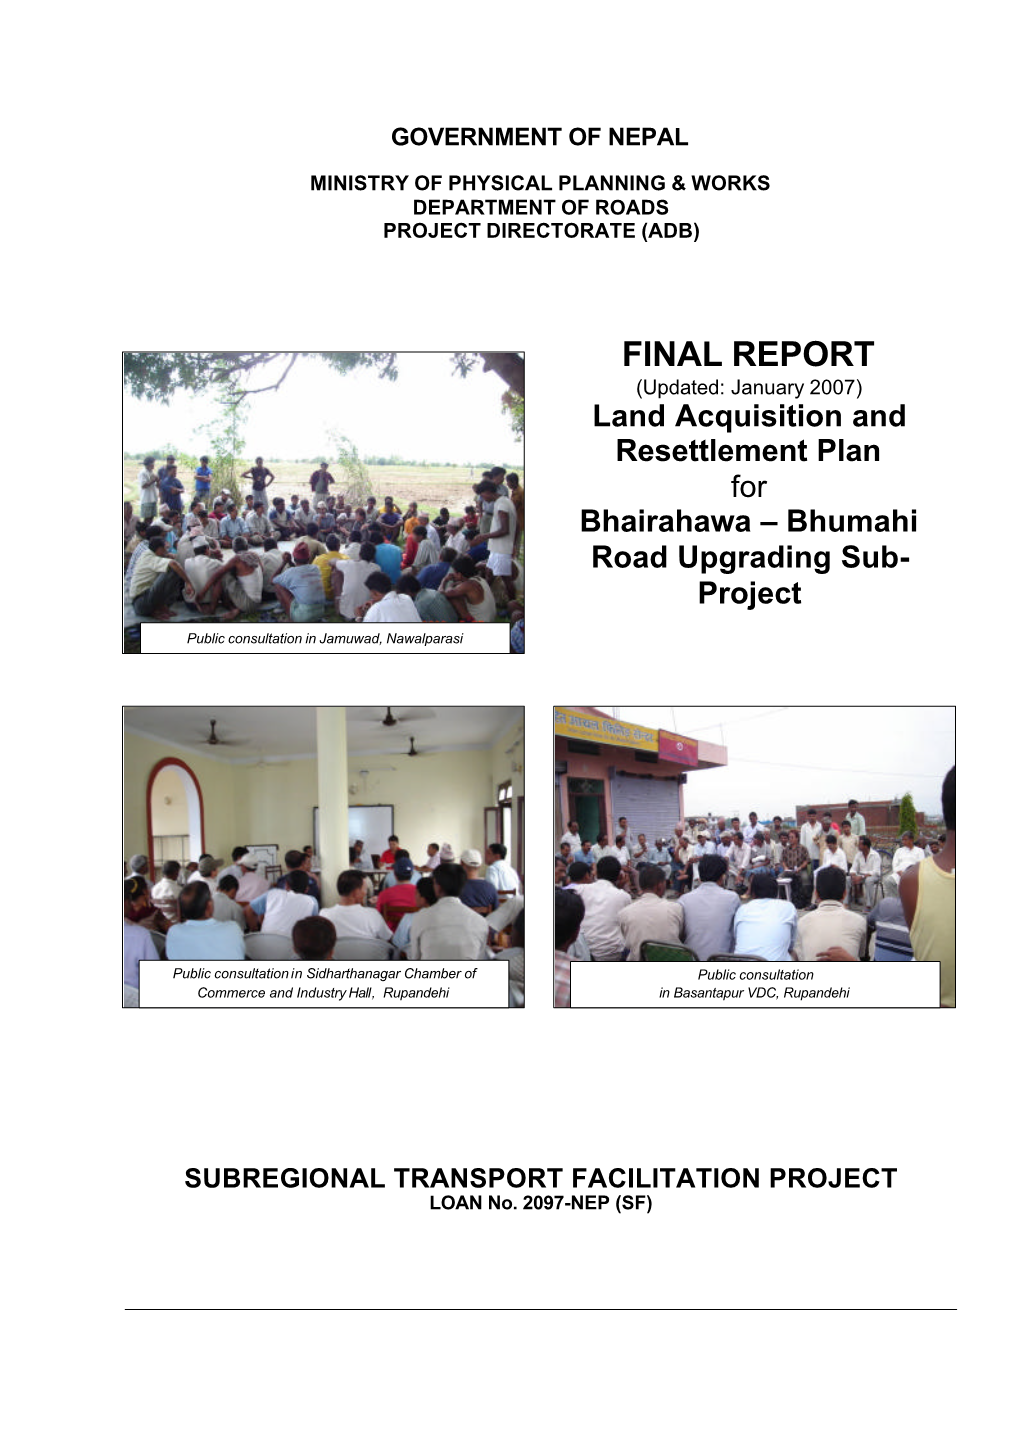 Bhairahawa – Bhumahi Road Upgrading Sub- Project